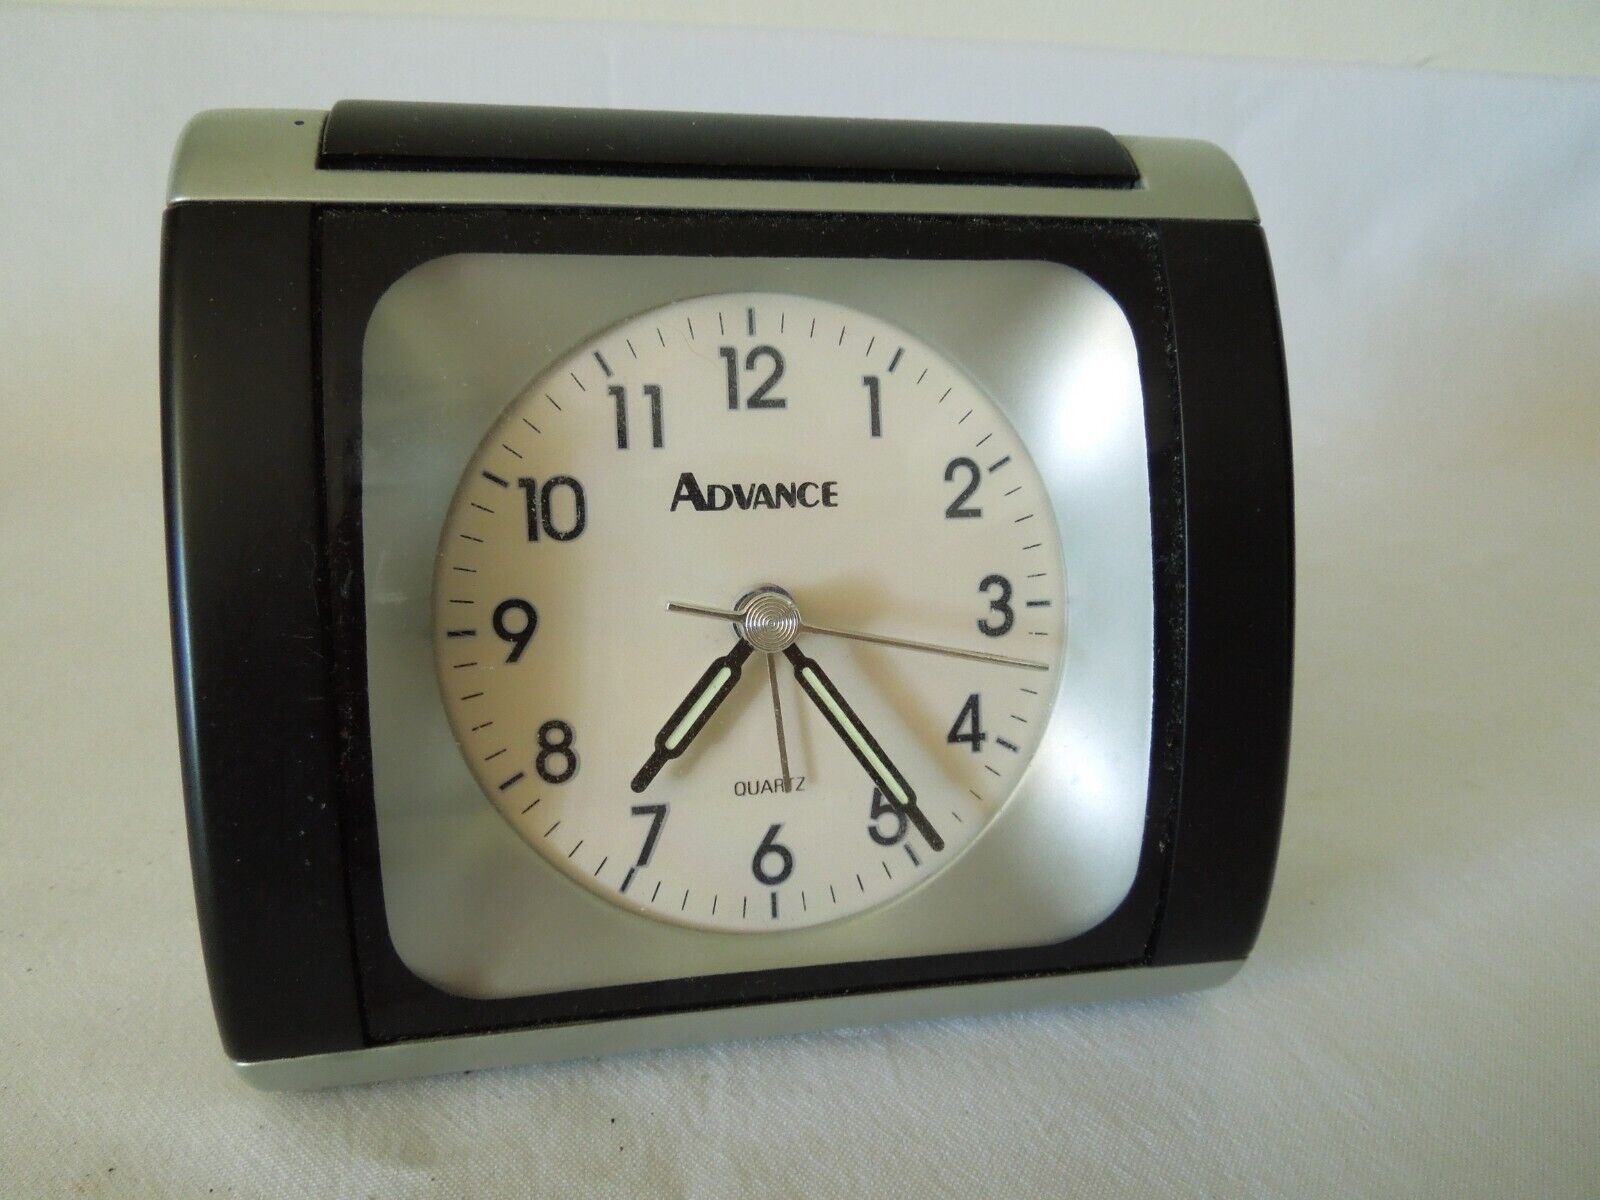 Advance Quartz Alarm Clock with Snooze, Backlight and Progressive Beeping Alarm